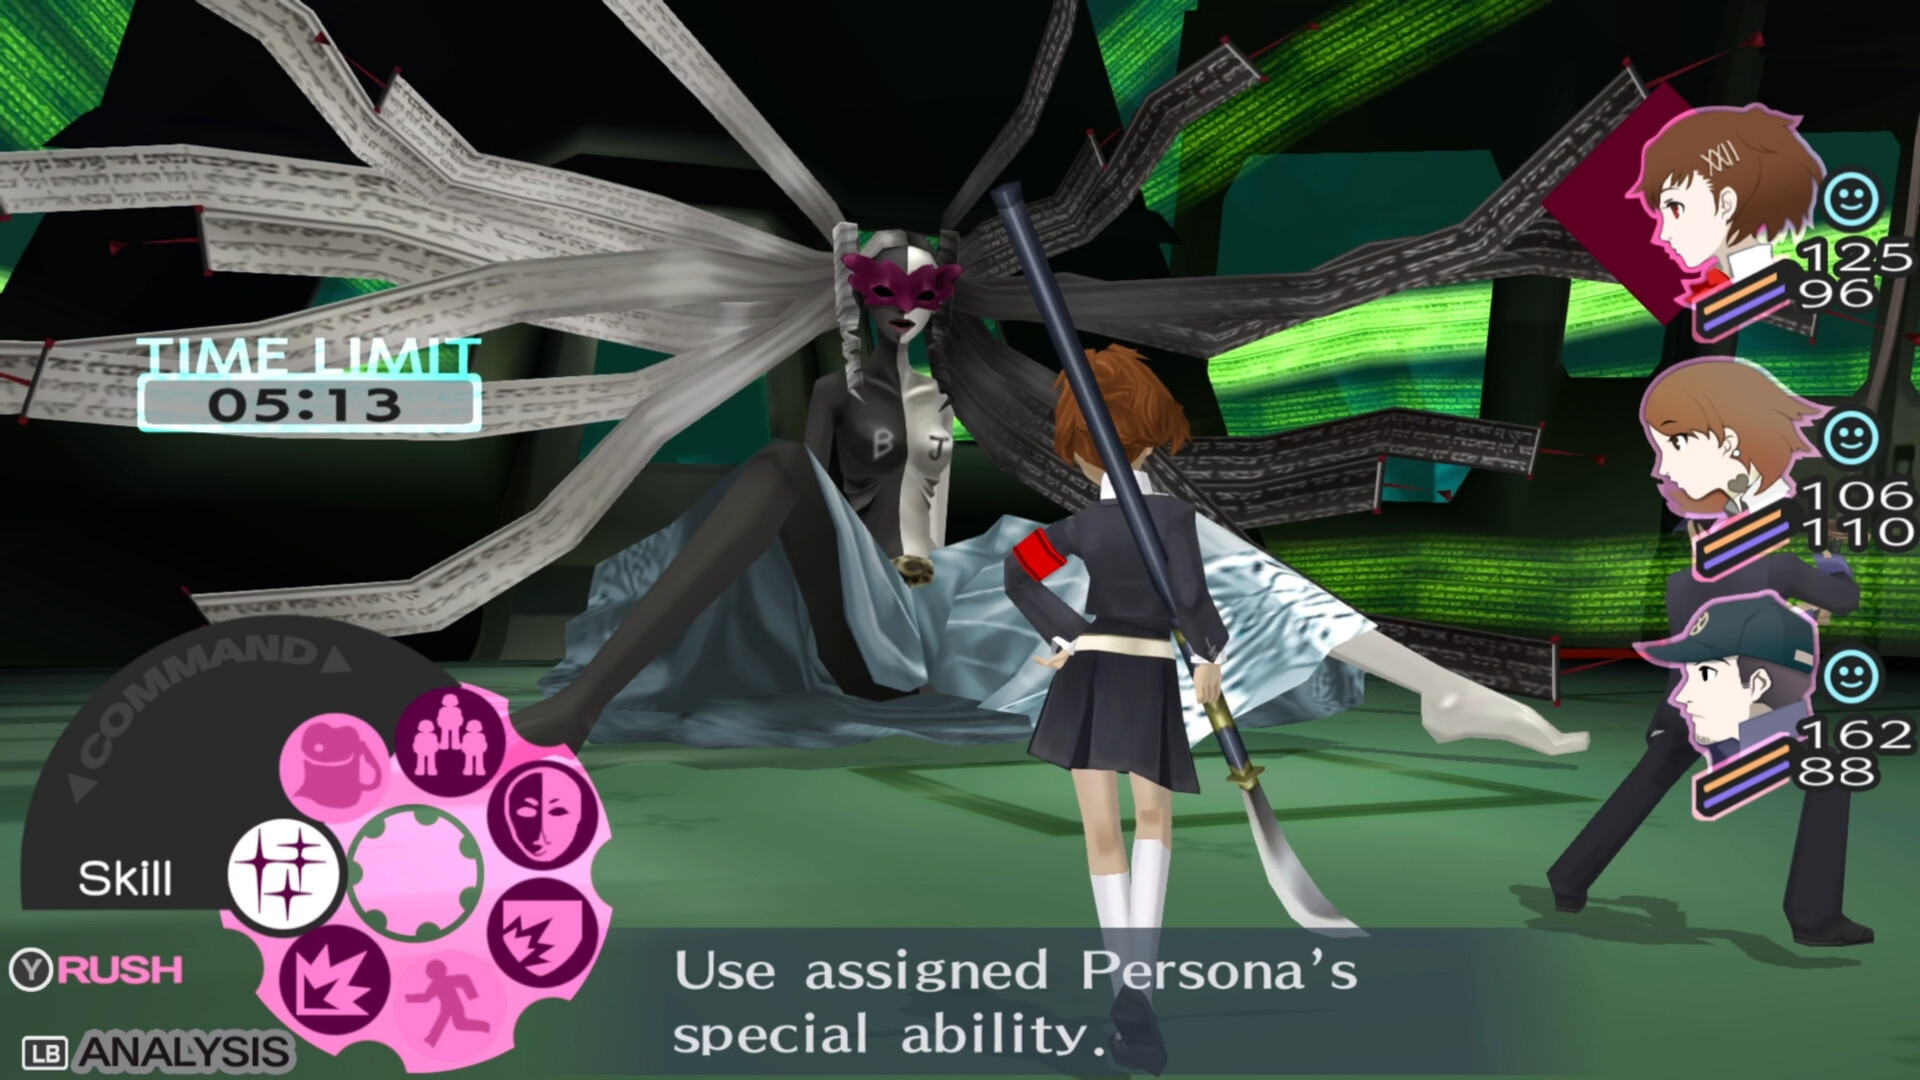 Persona 3 Portable on Steam